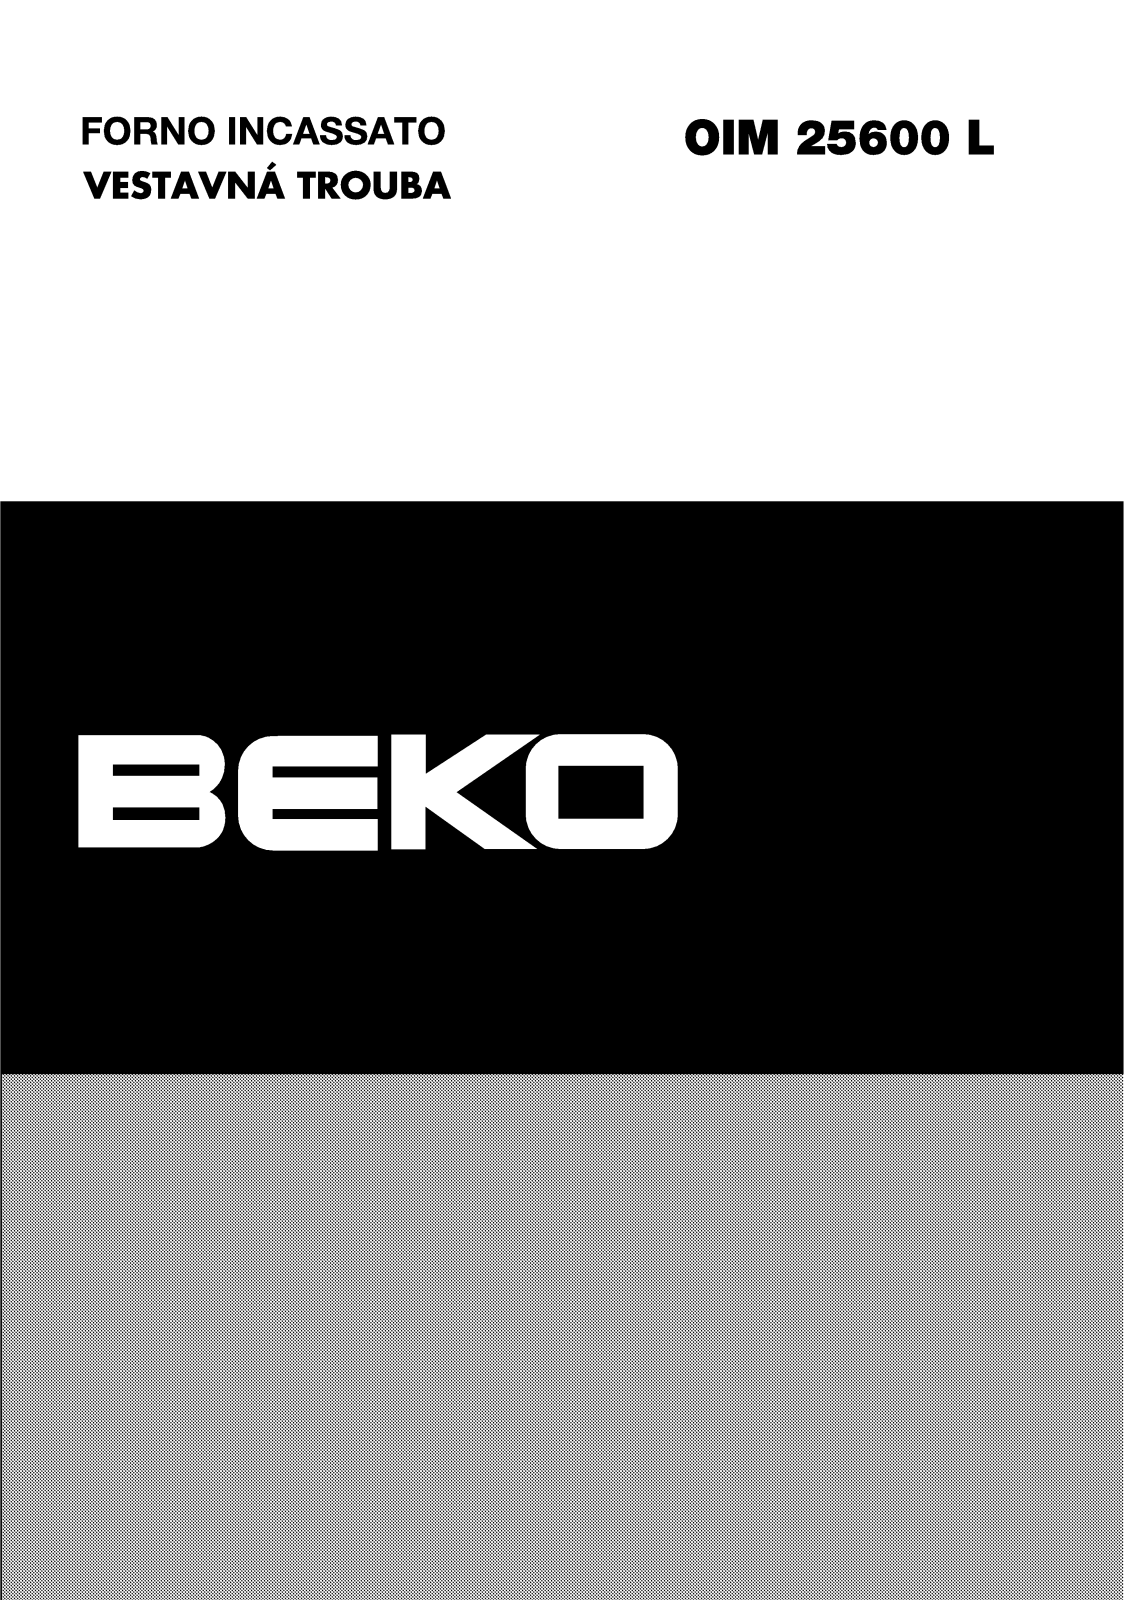 Beko OIM 25600 L Manual